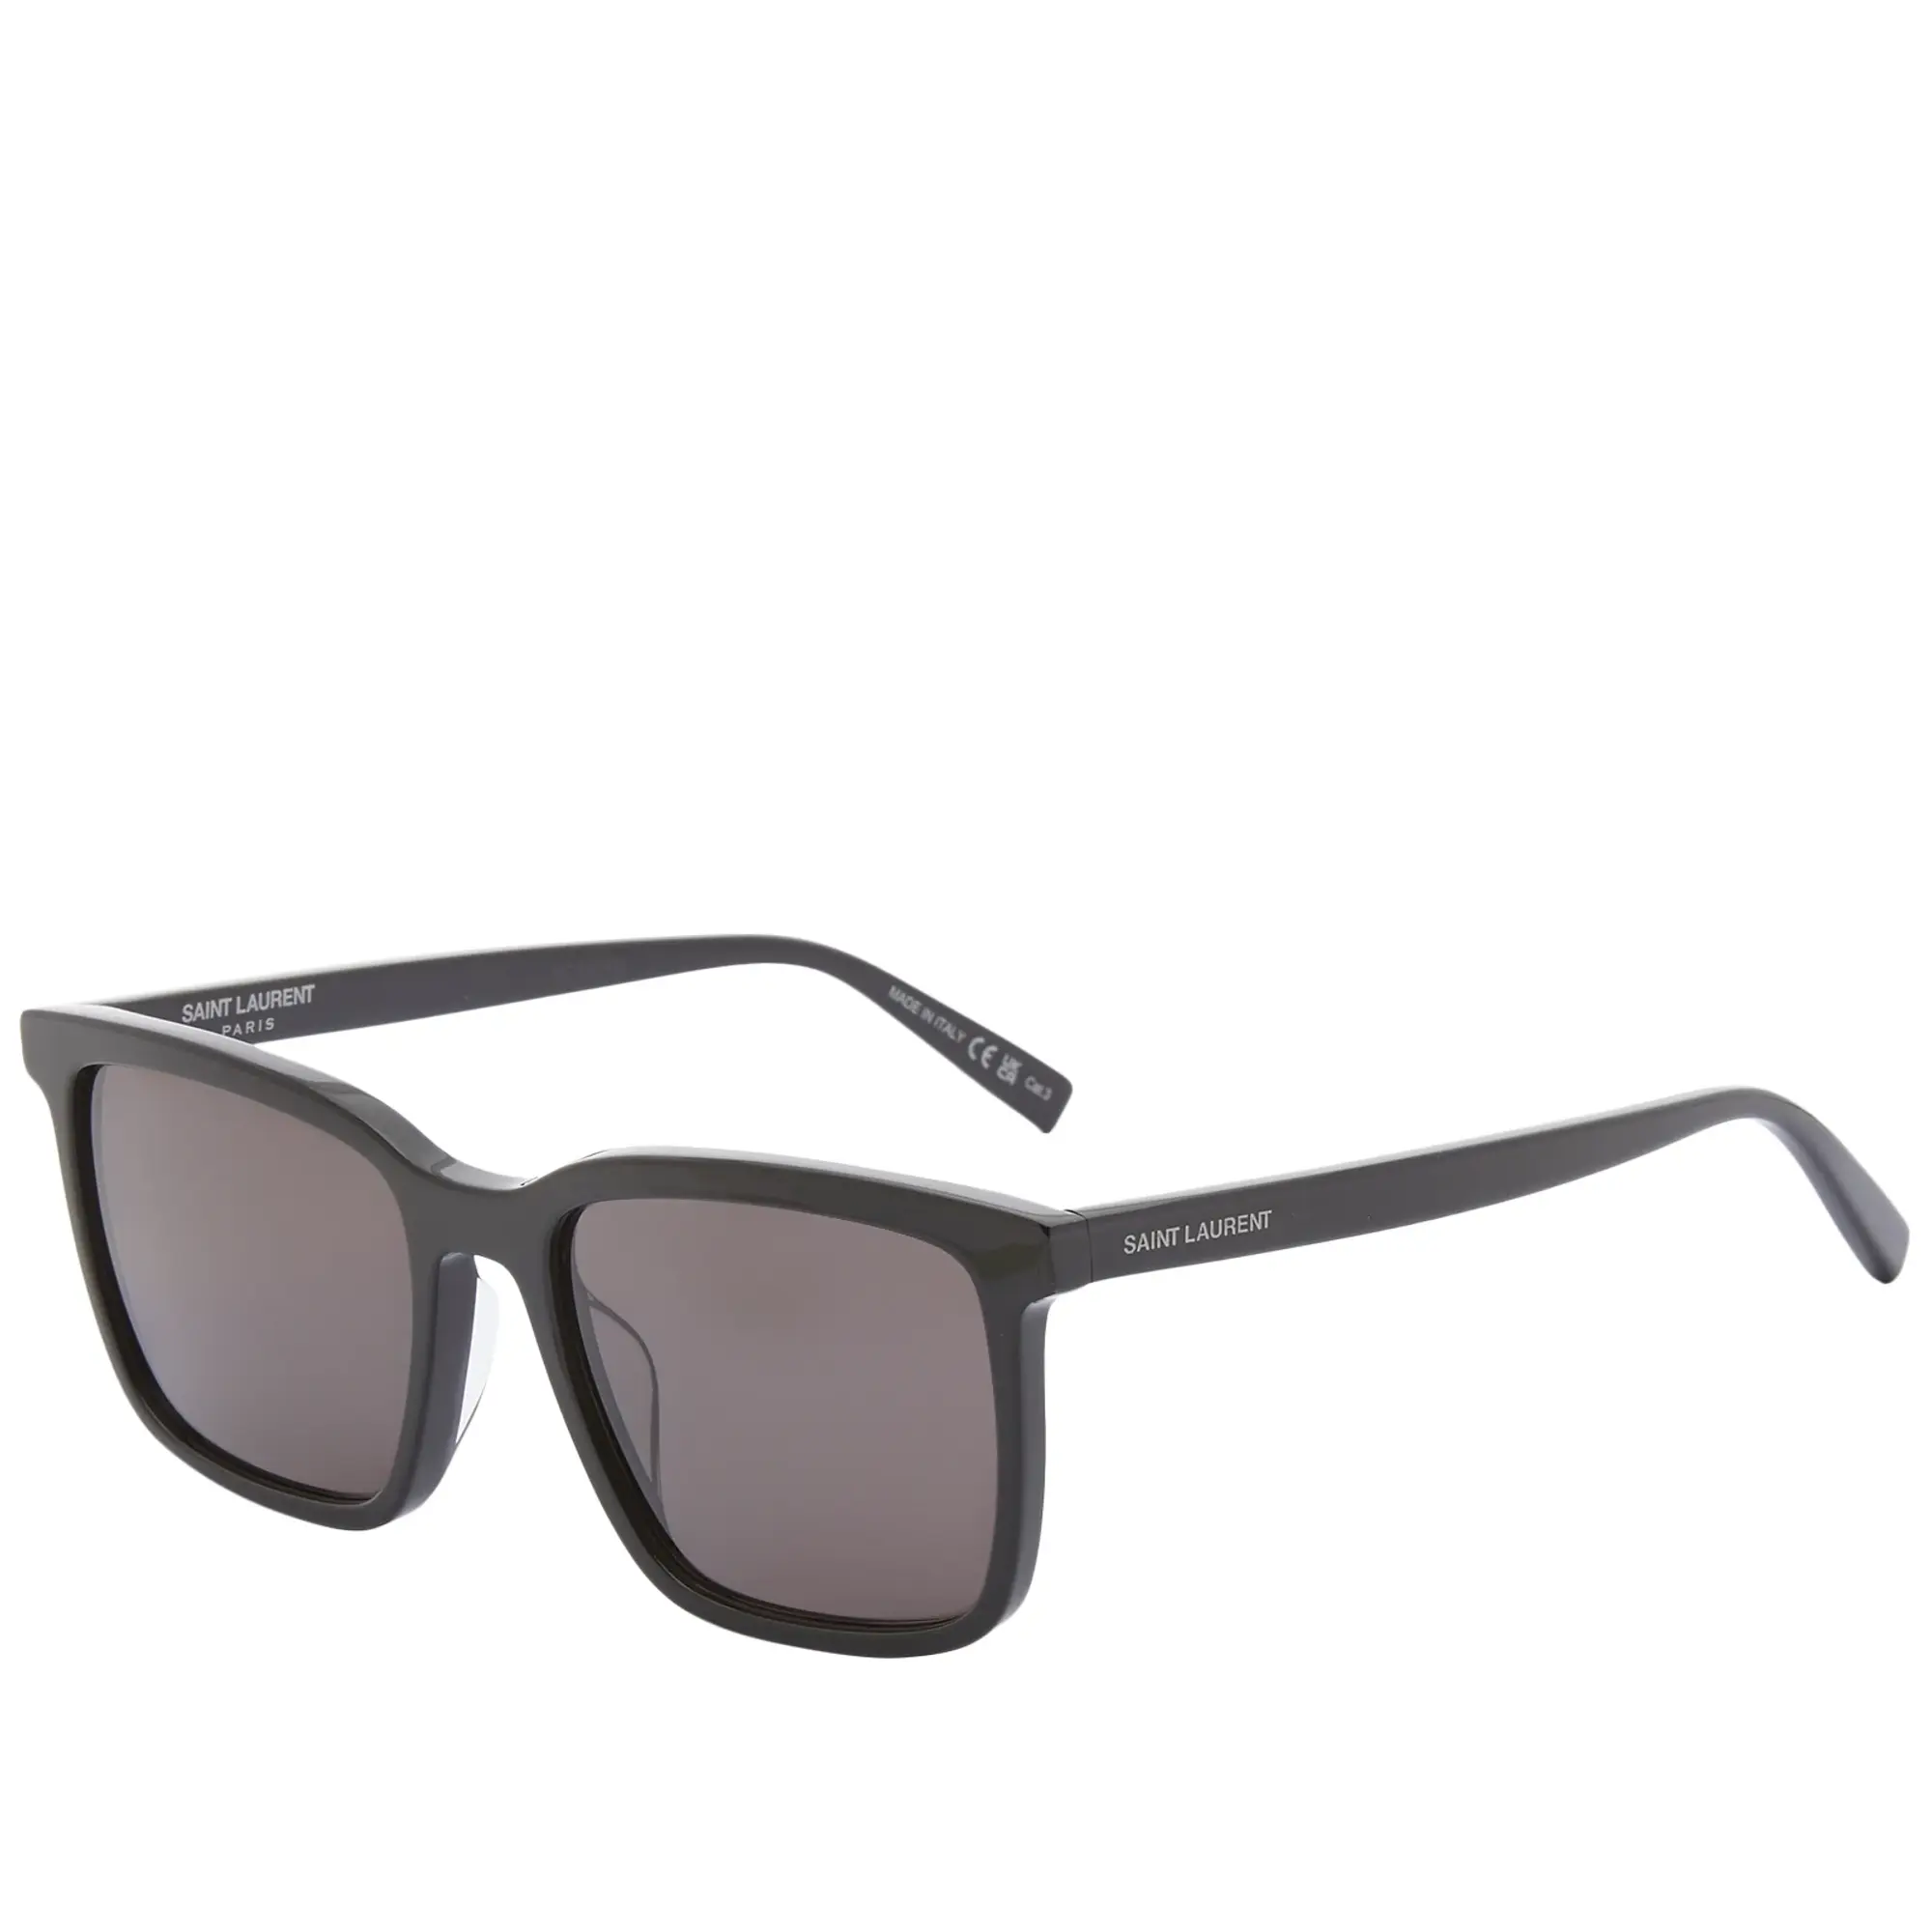 Saint Laurent Sunglasses Saint Laurent SL 500 Sunglasses Black